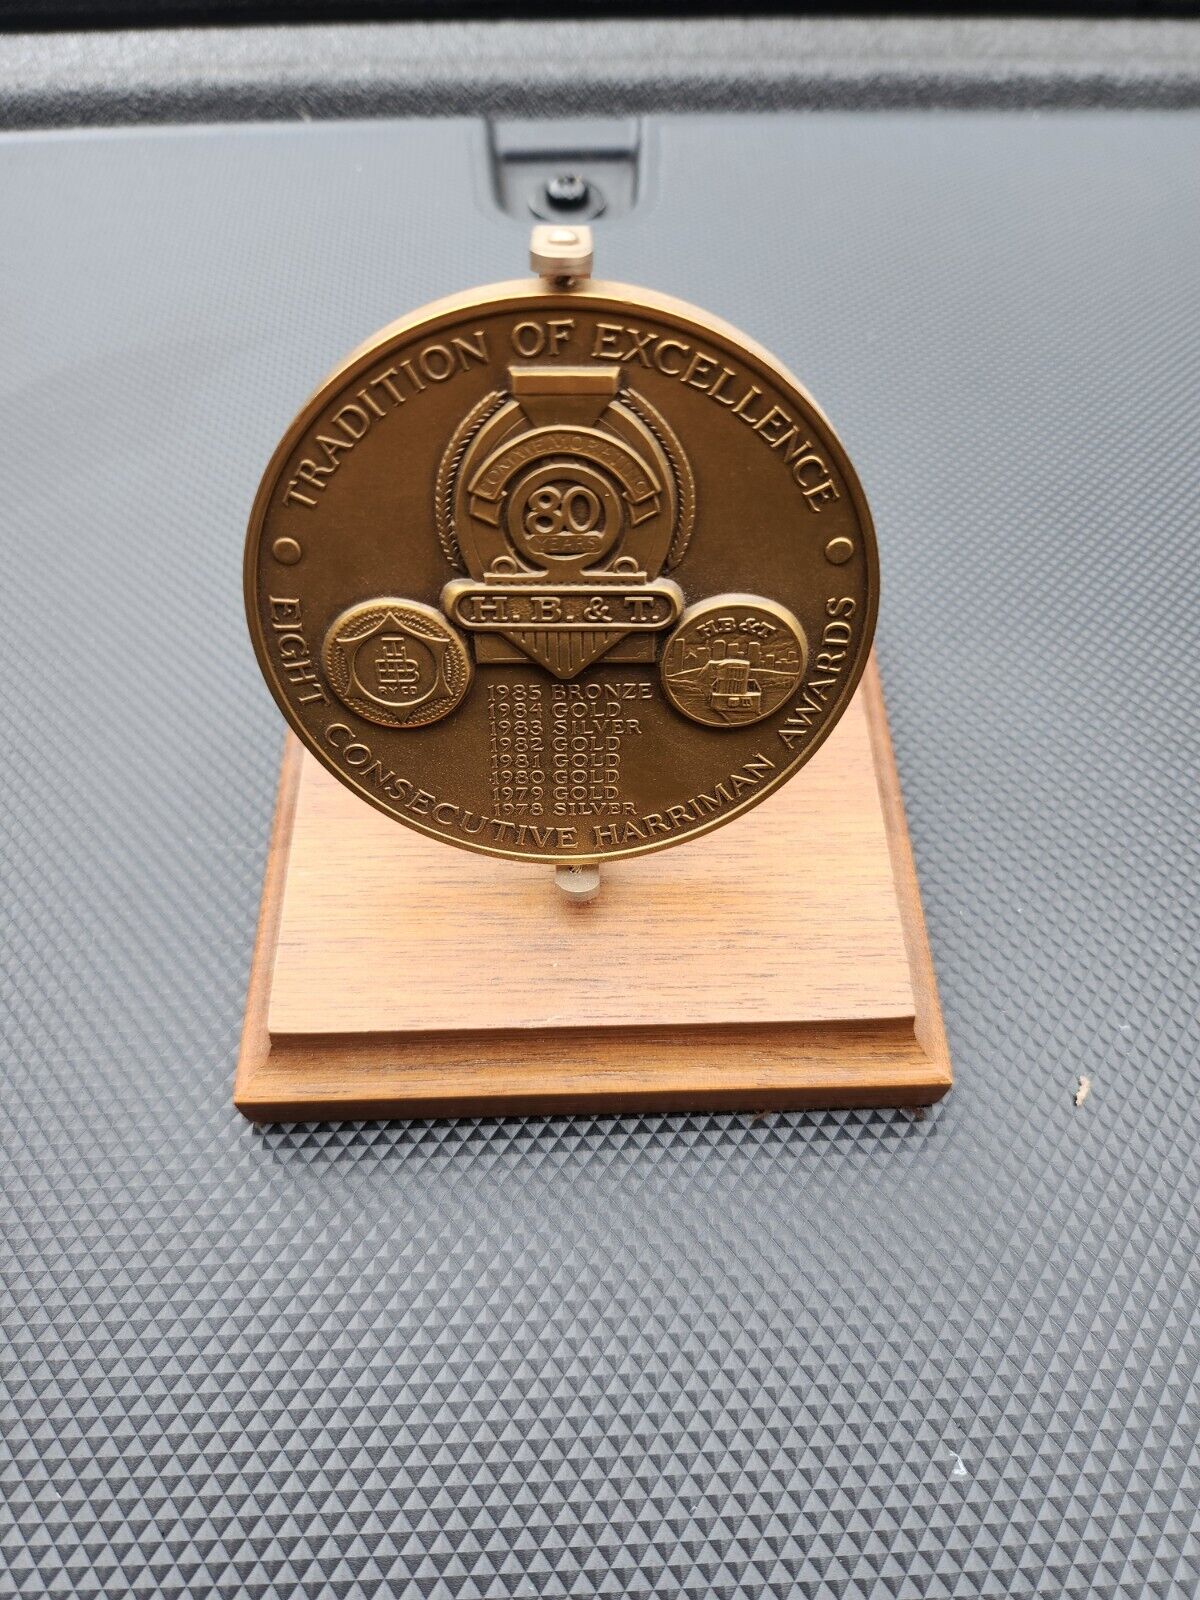 Houston Belt & Terminal Medallion 